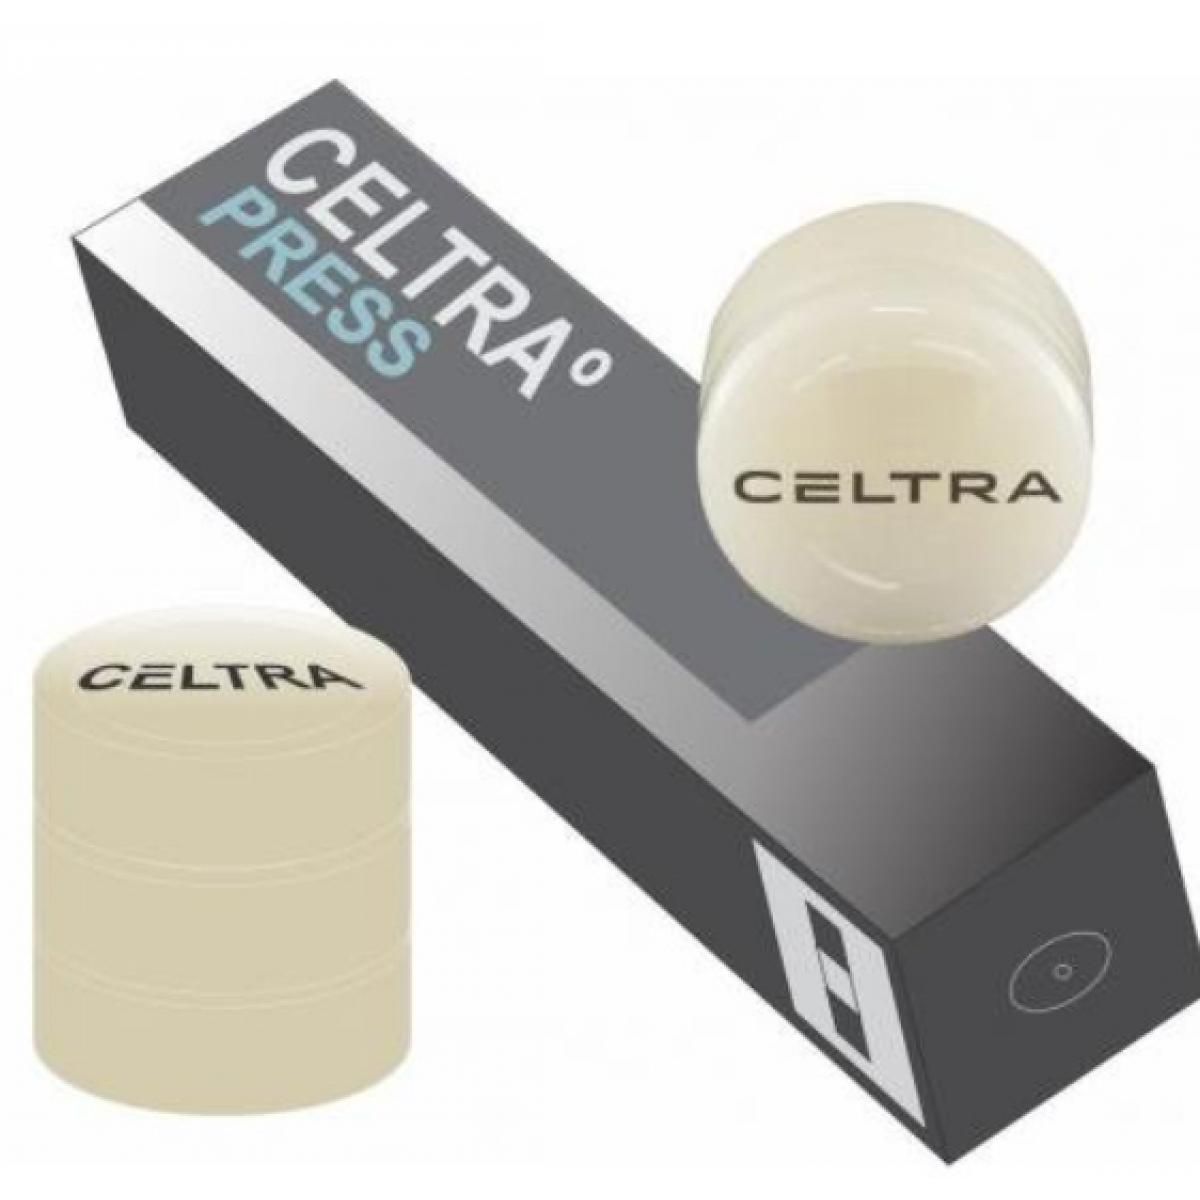 CELTRA PRESS MT C1 5 X 3 GR DENTSPLY -